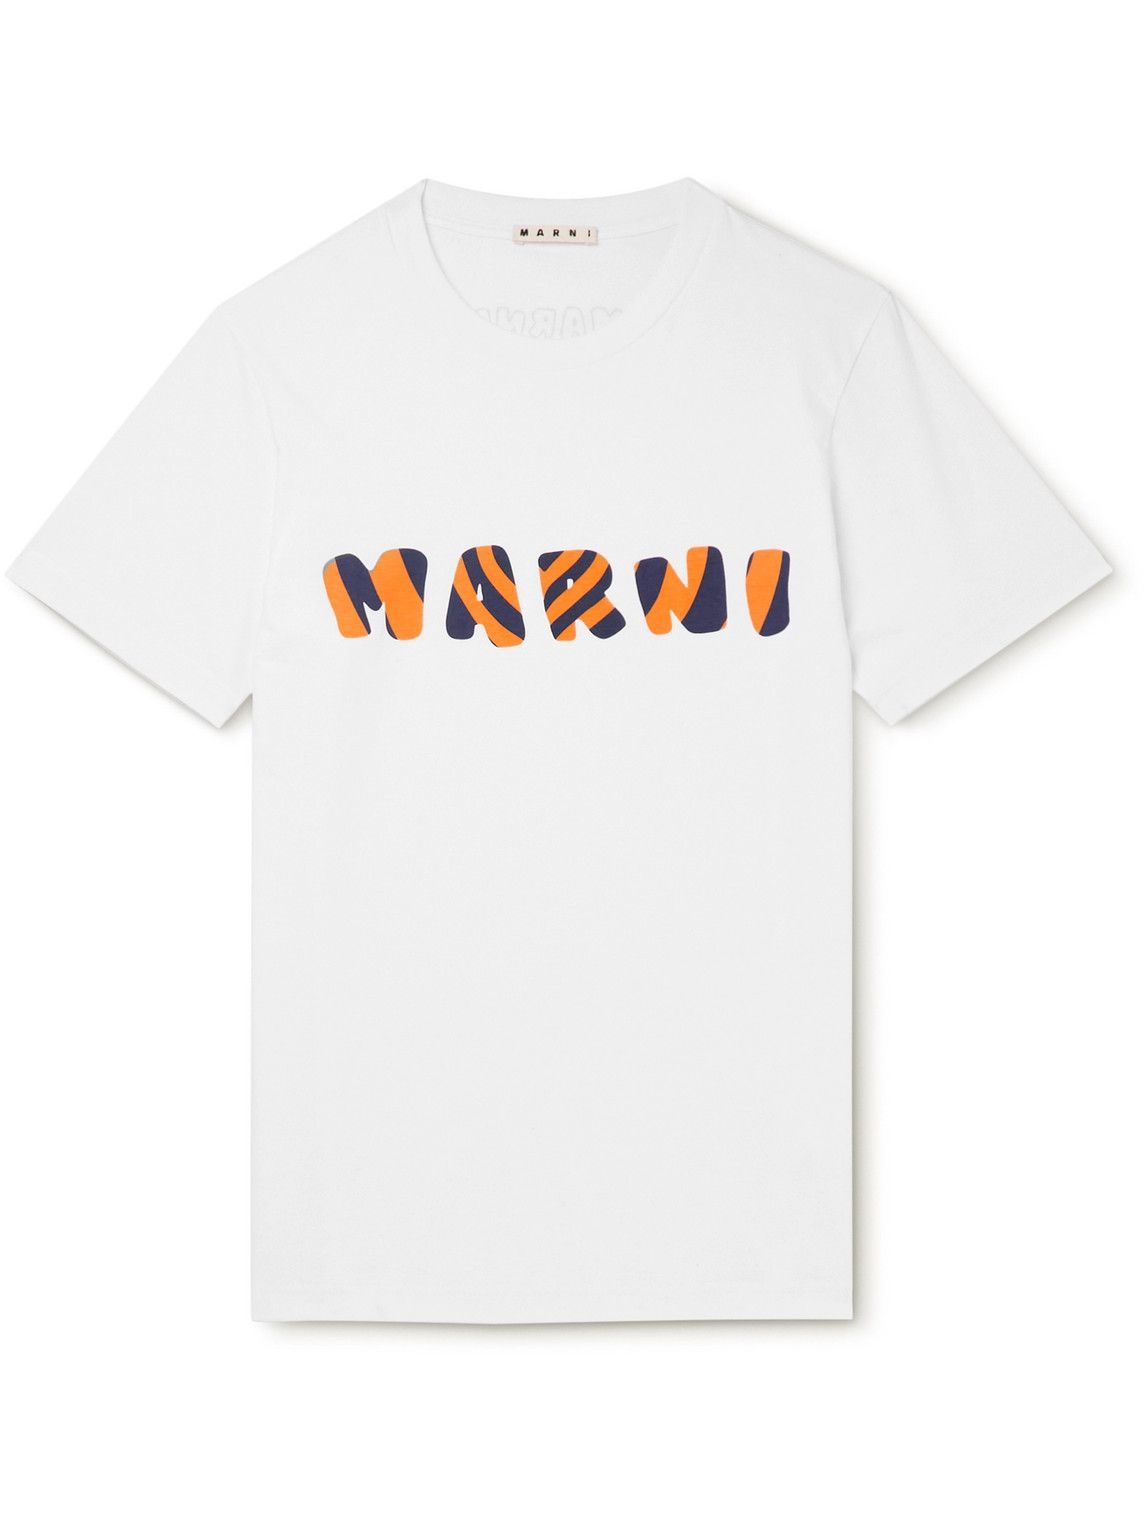 Marni - Logo-Print Cotton-Jersey T-Shirt - White Marni